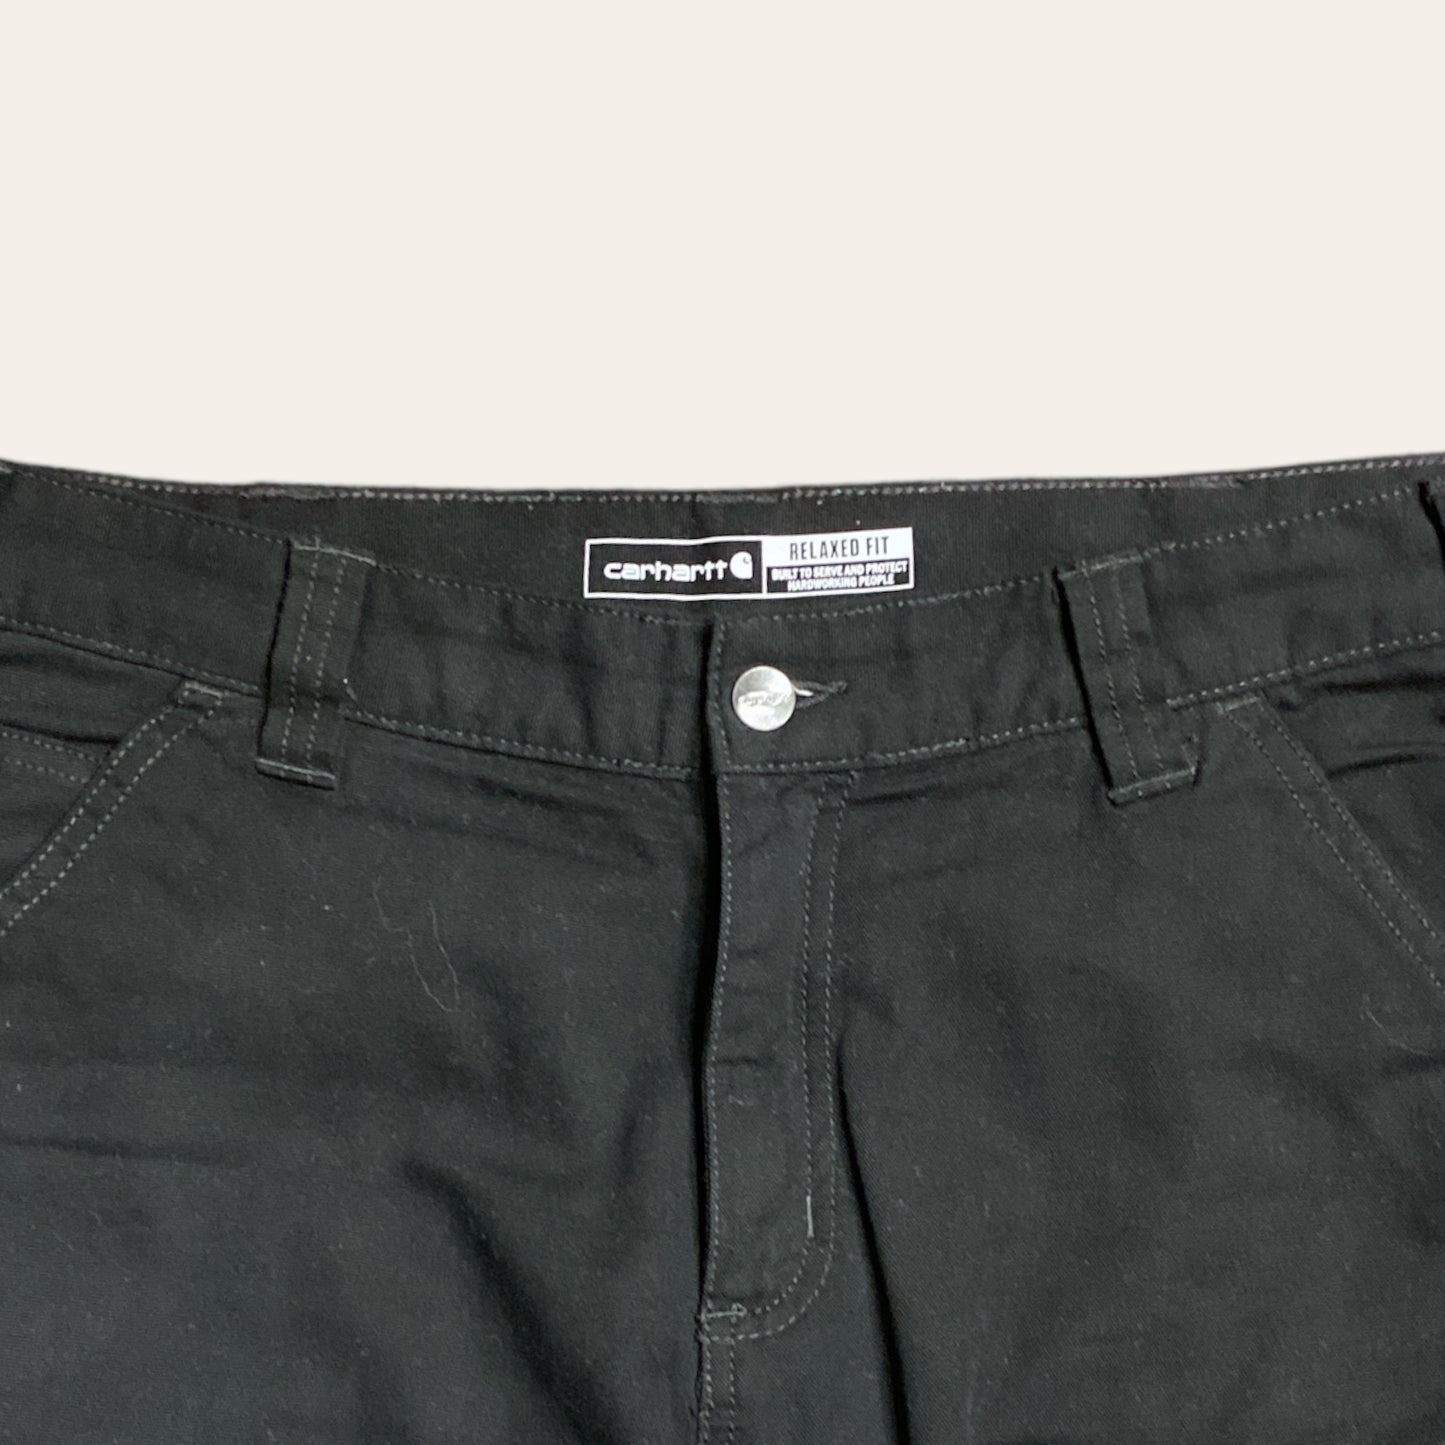 Carhartt Cargo Pants Black Size 33x30